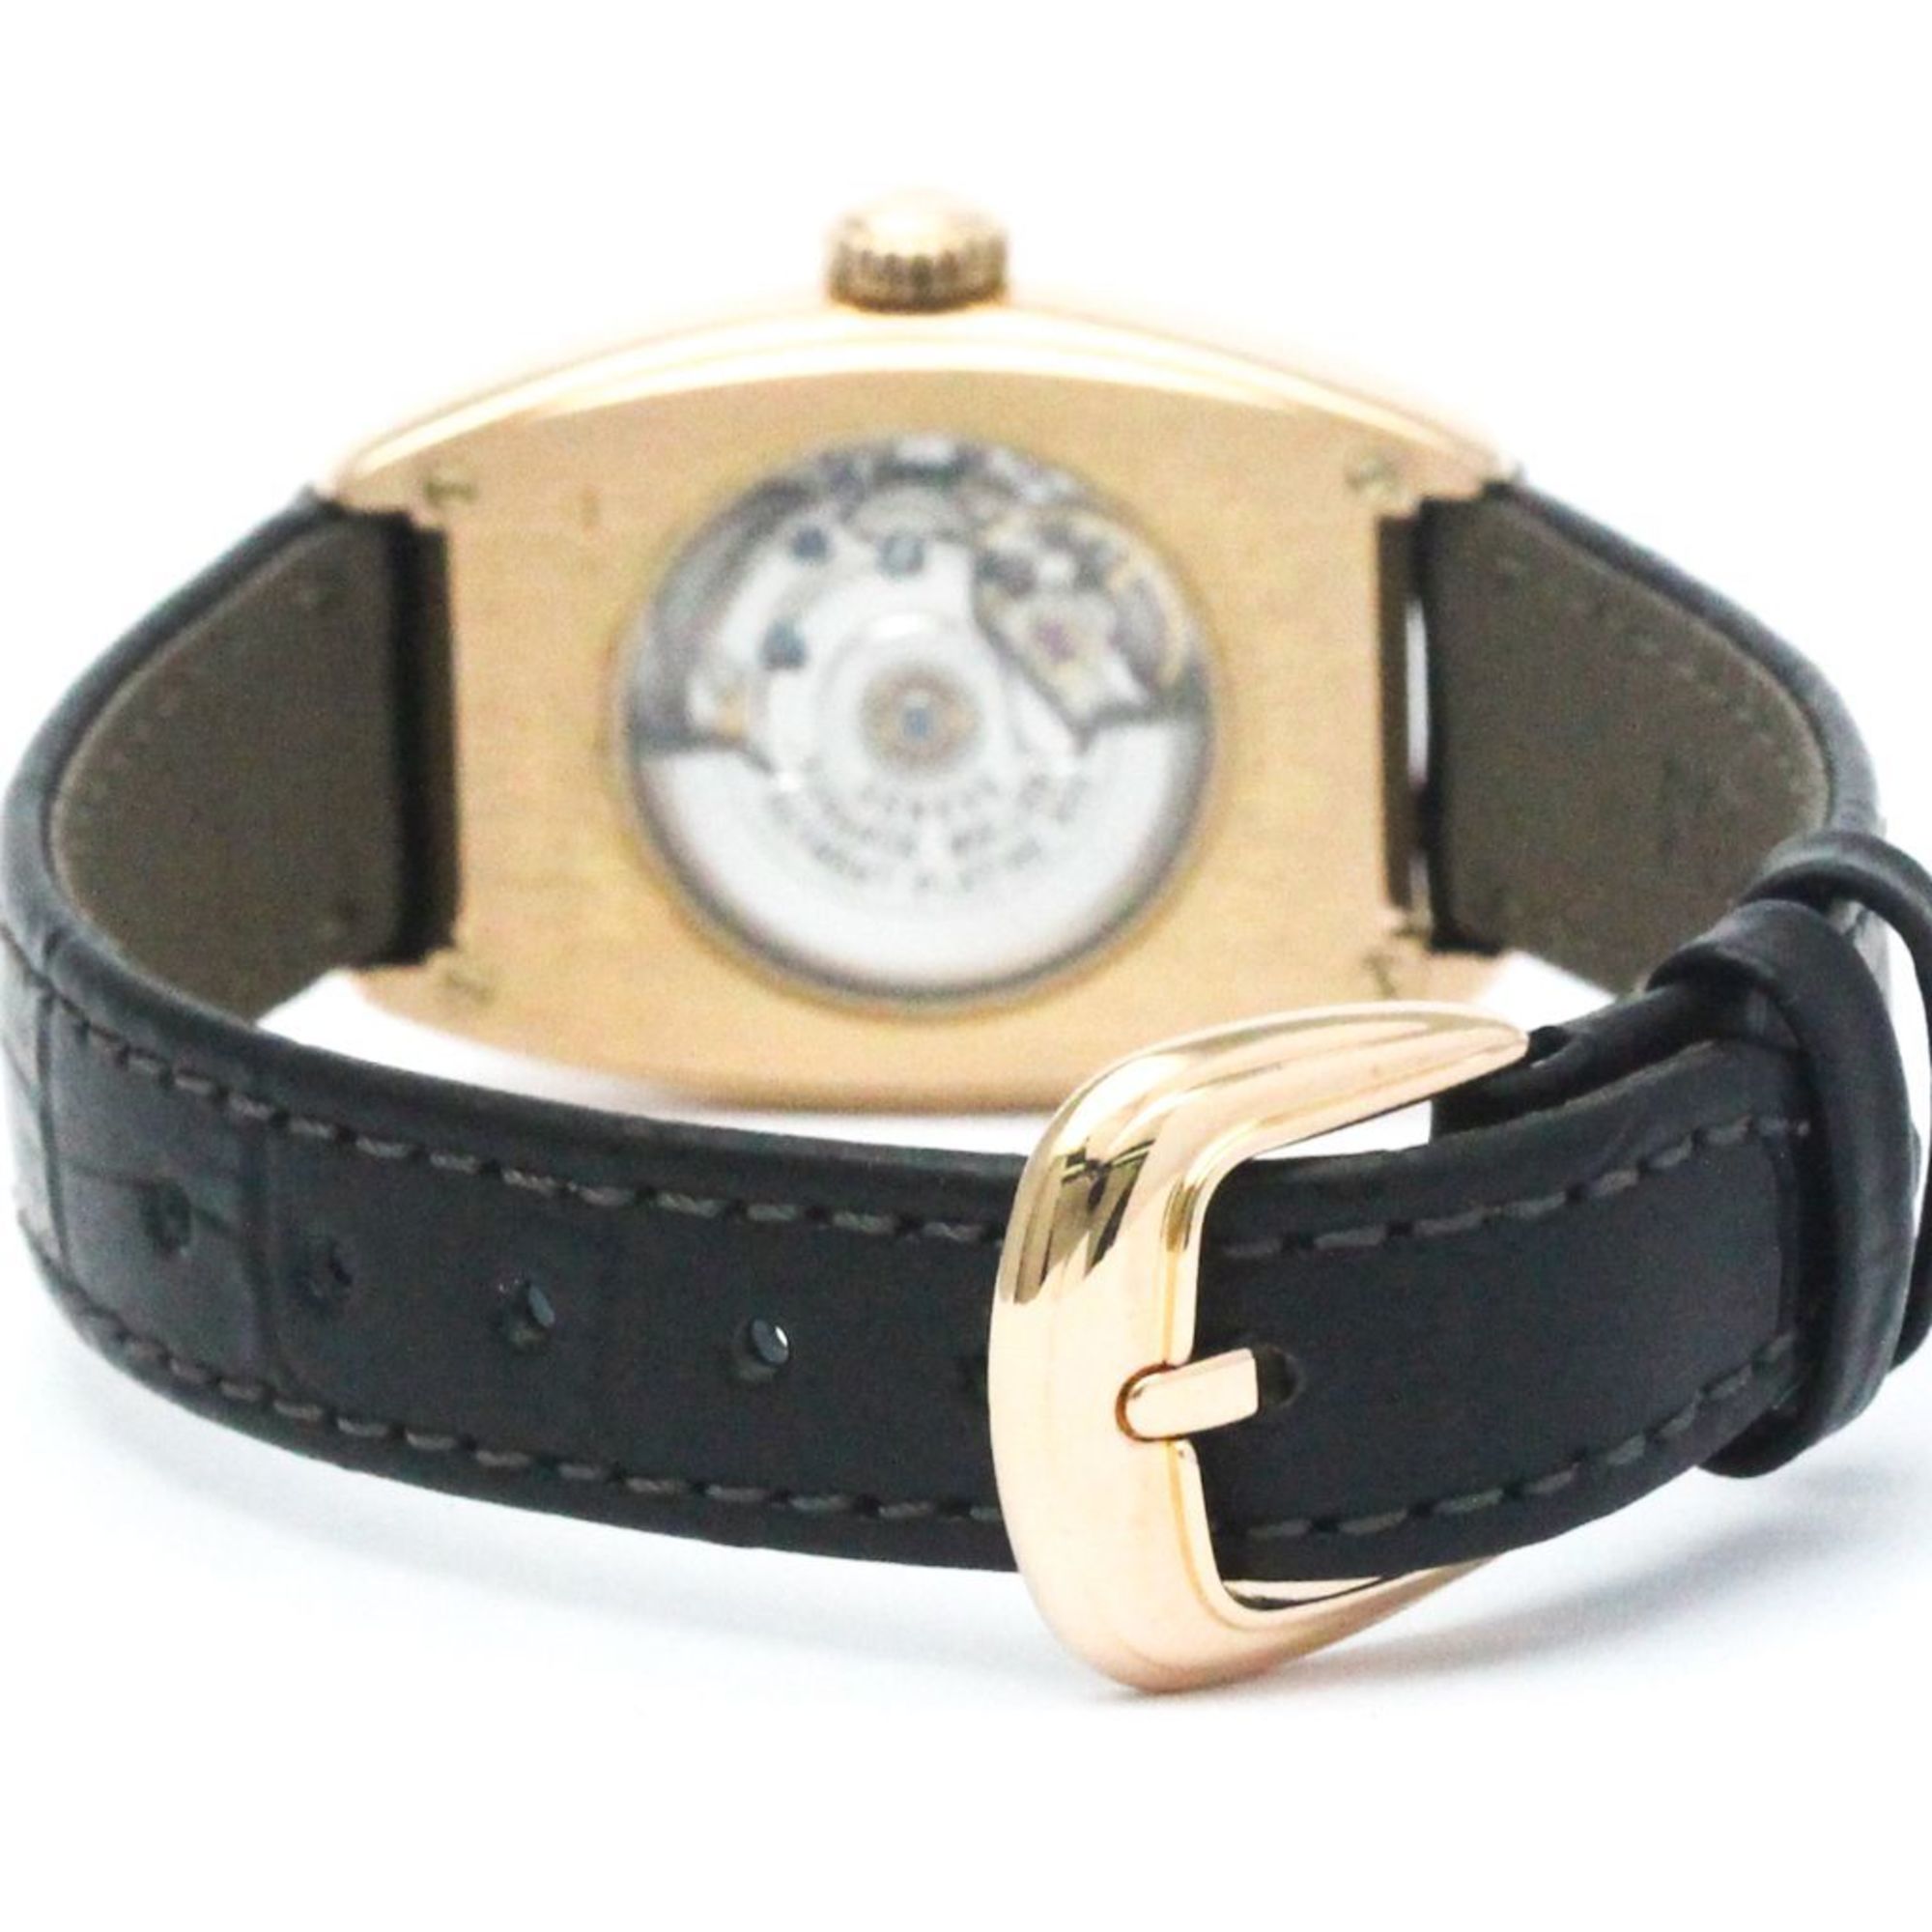 FRANCK MULLER Cintree Curvex 18K Pink Gold Watch 1750 SC AT DT FO REL BF564360